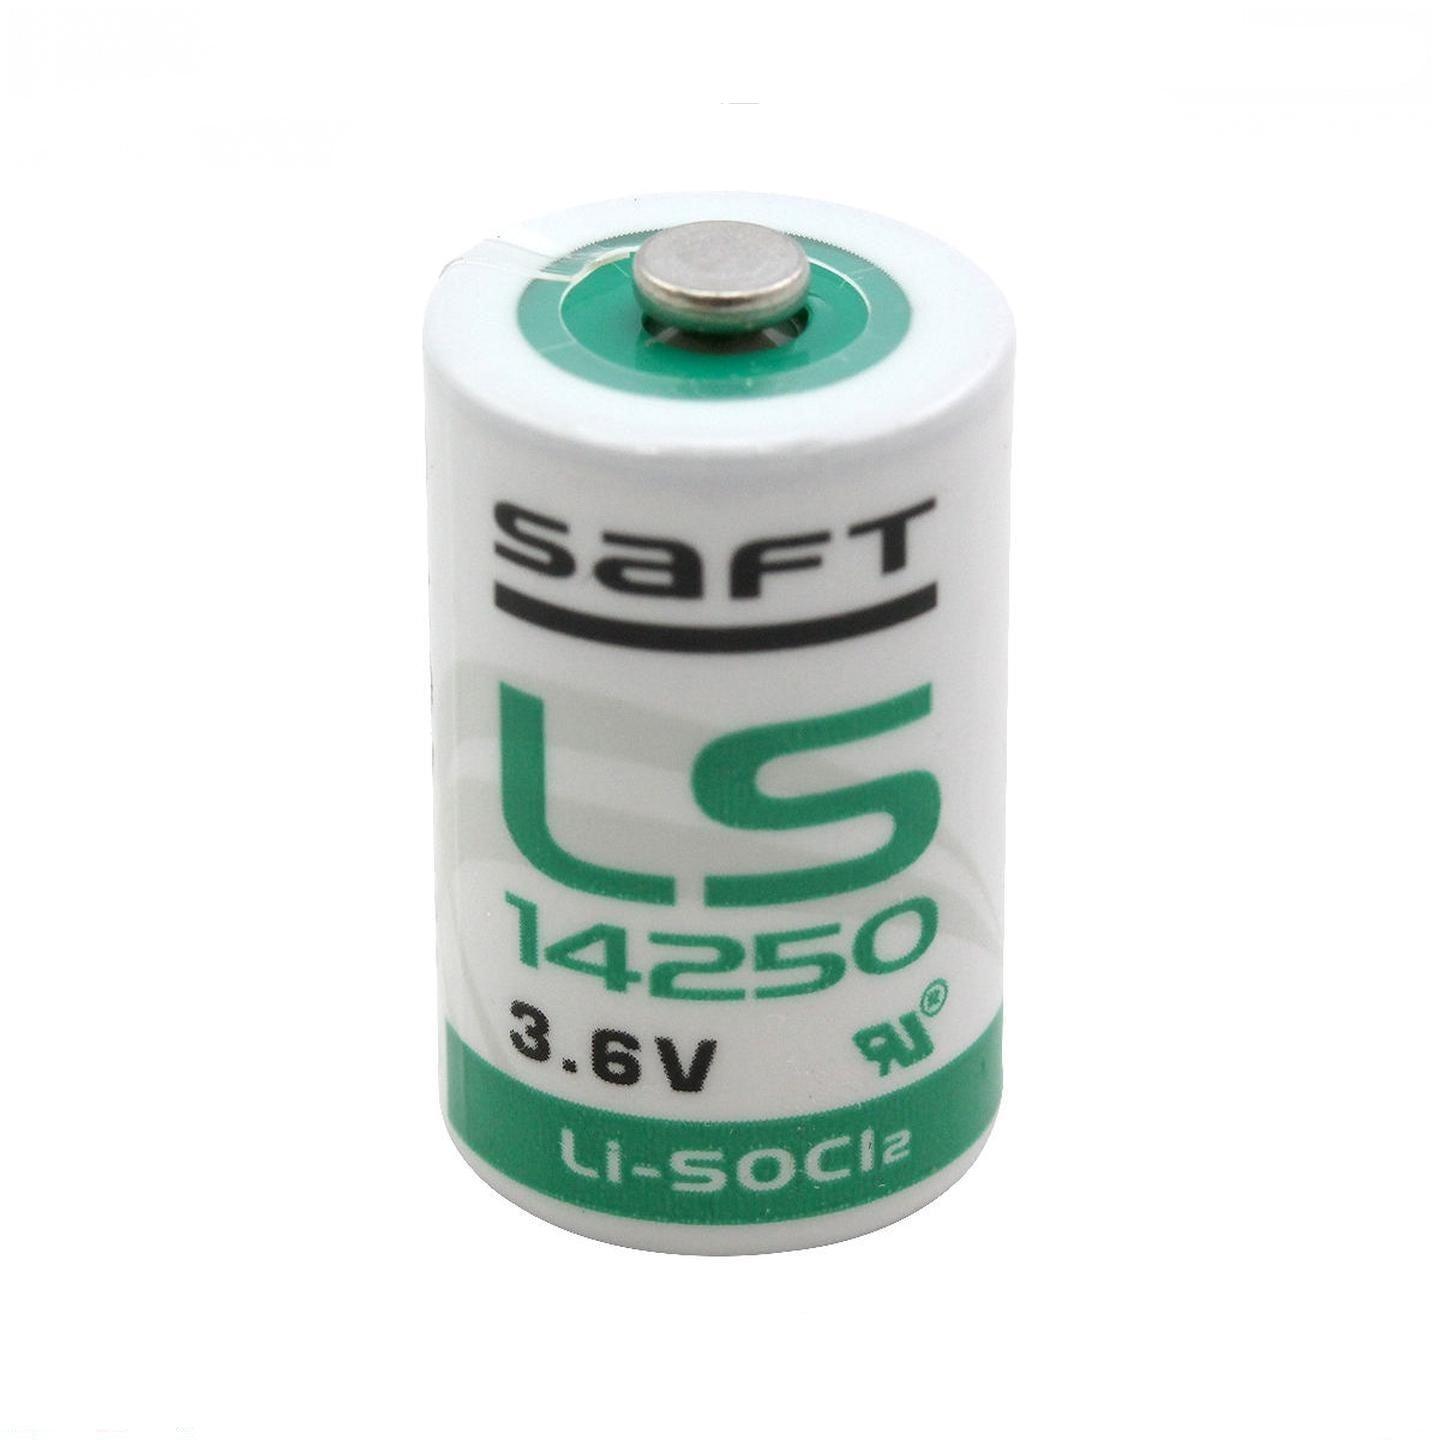 Saft LS14250 ER14250 3.6V Lithium Battery 1/2AA R6 Li-SOCl2 nipple top battery - Office Catch